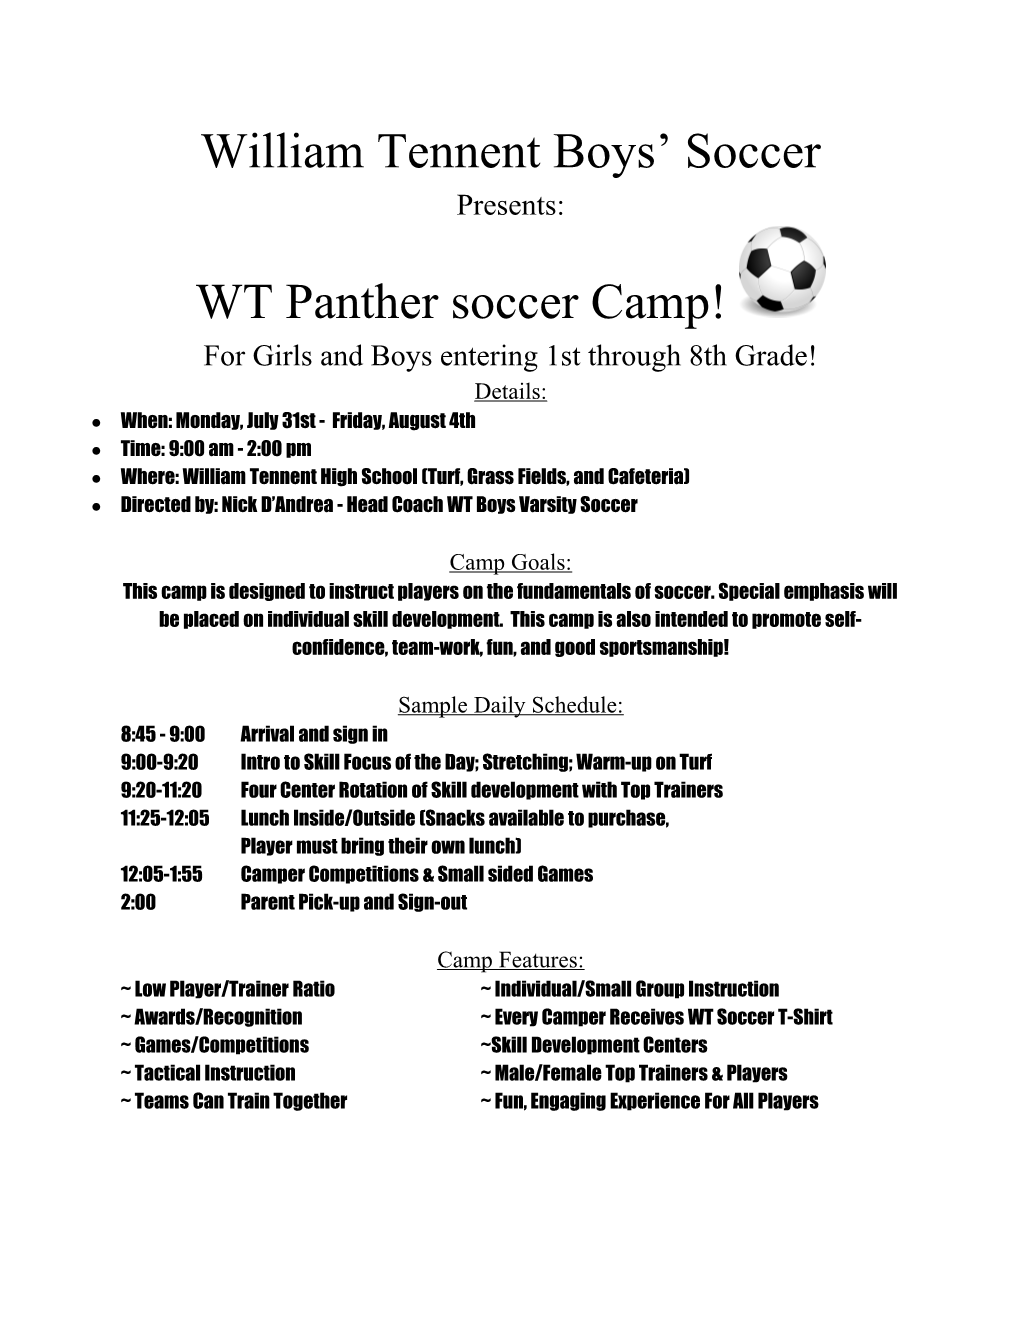 William Tennent Boys Soccer